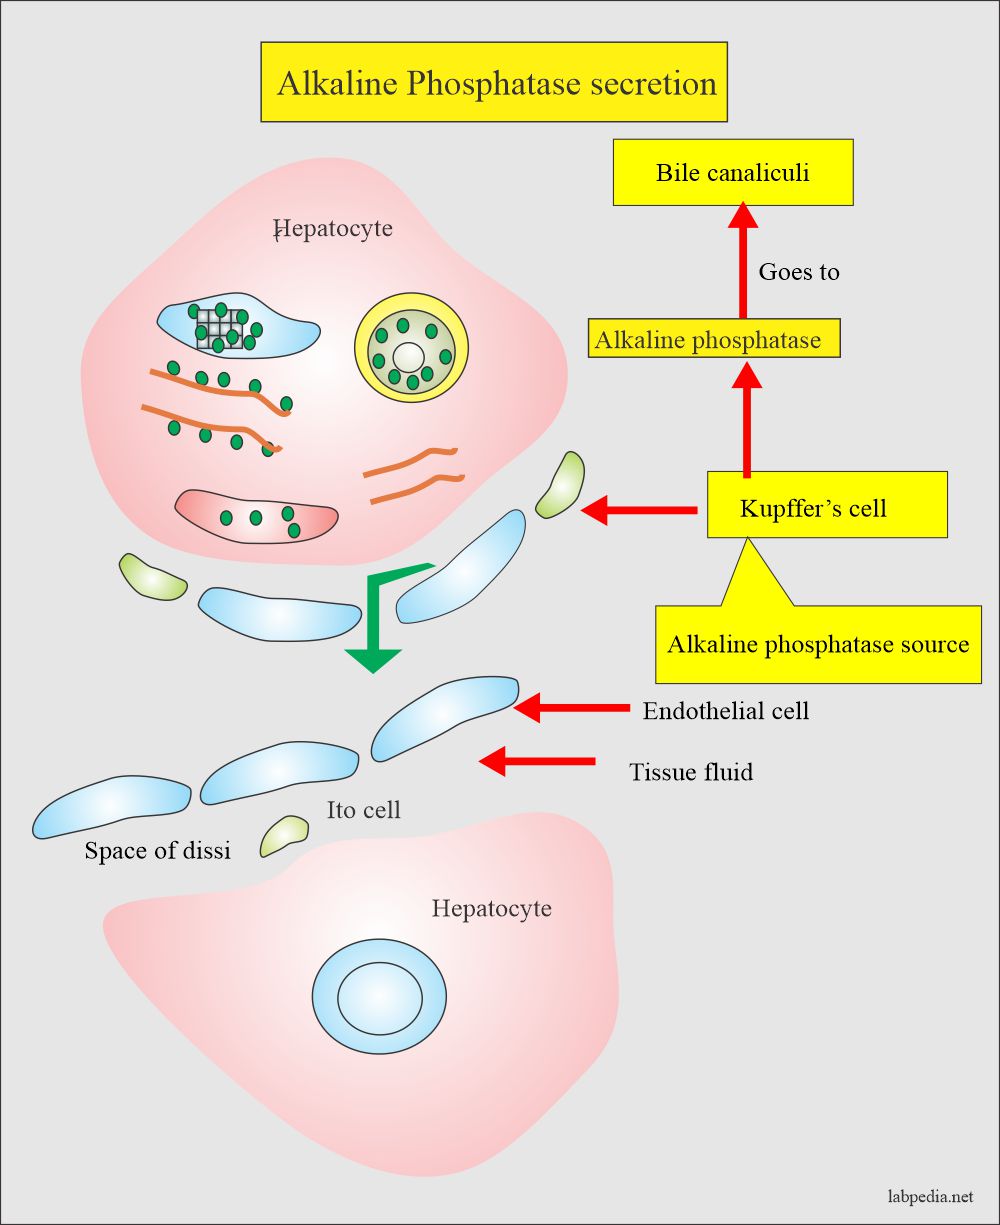 Alkaline phosphatase secretion in bile